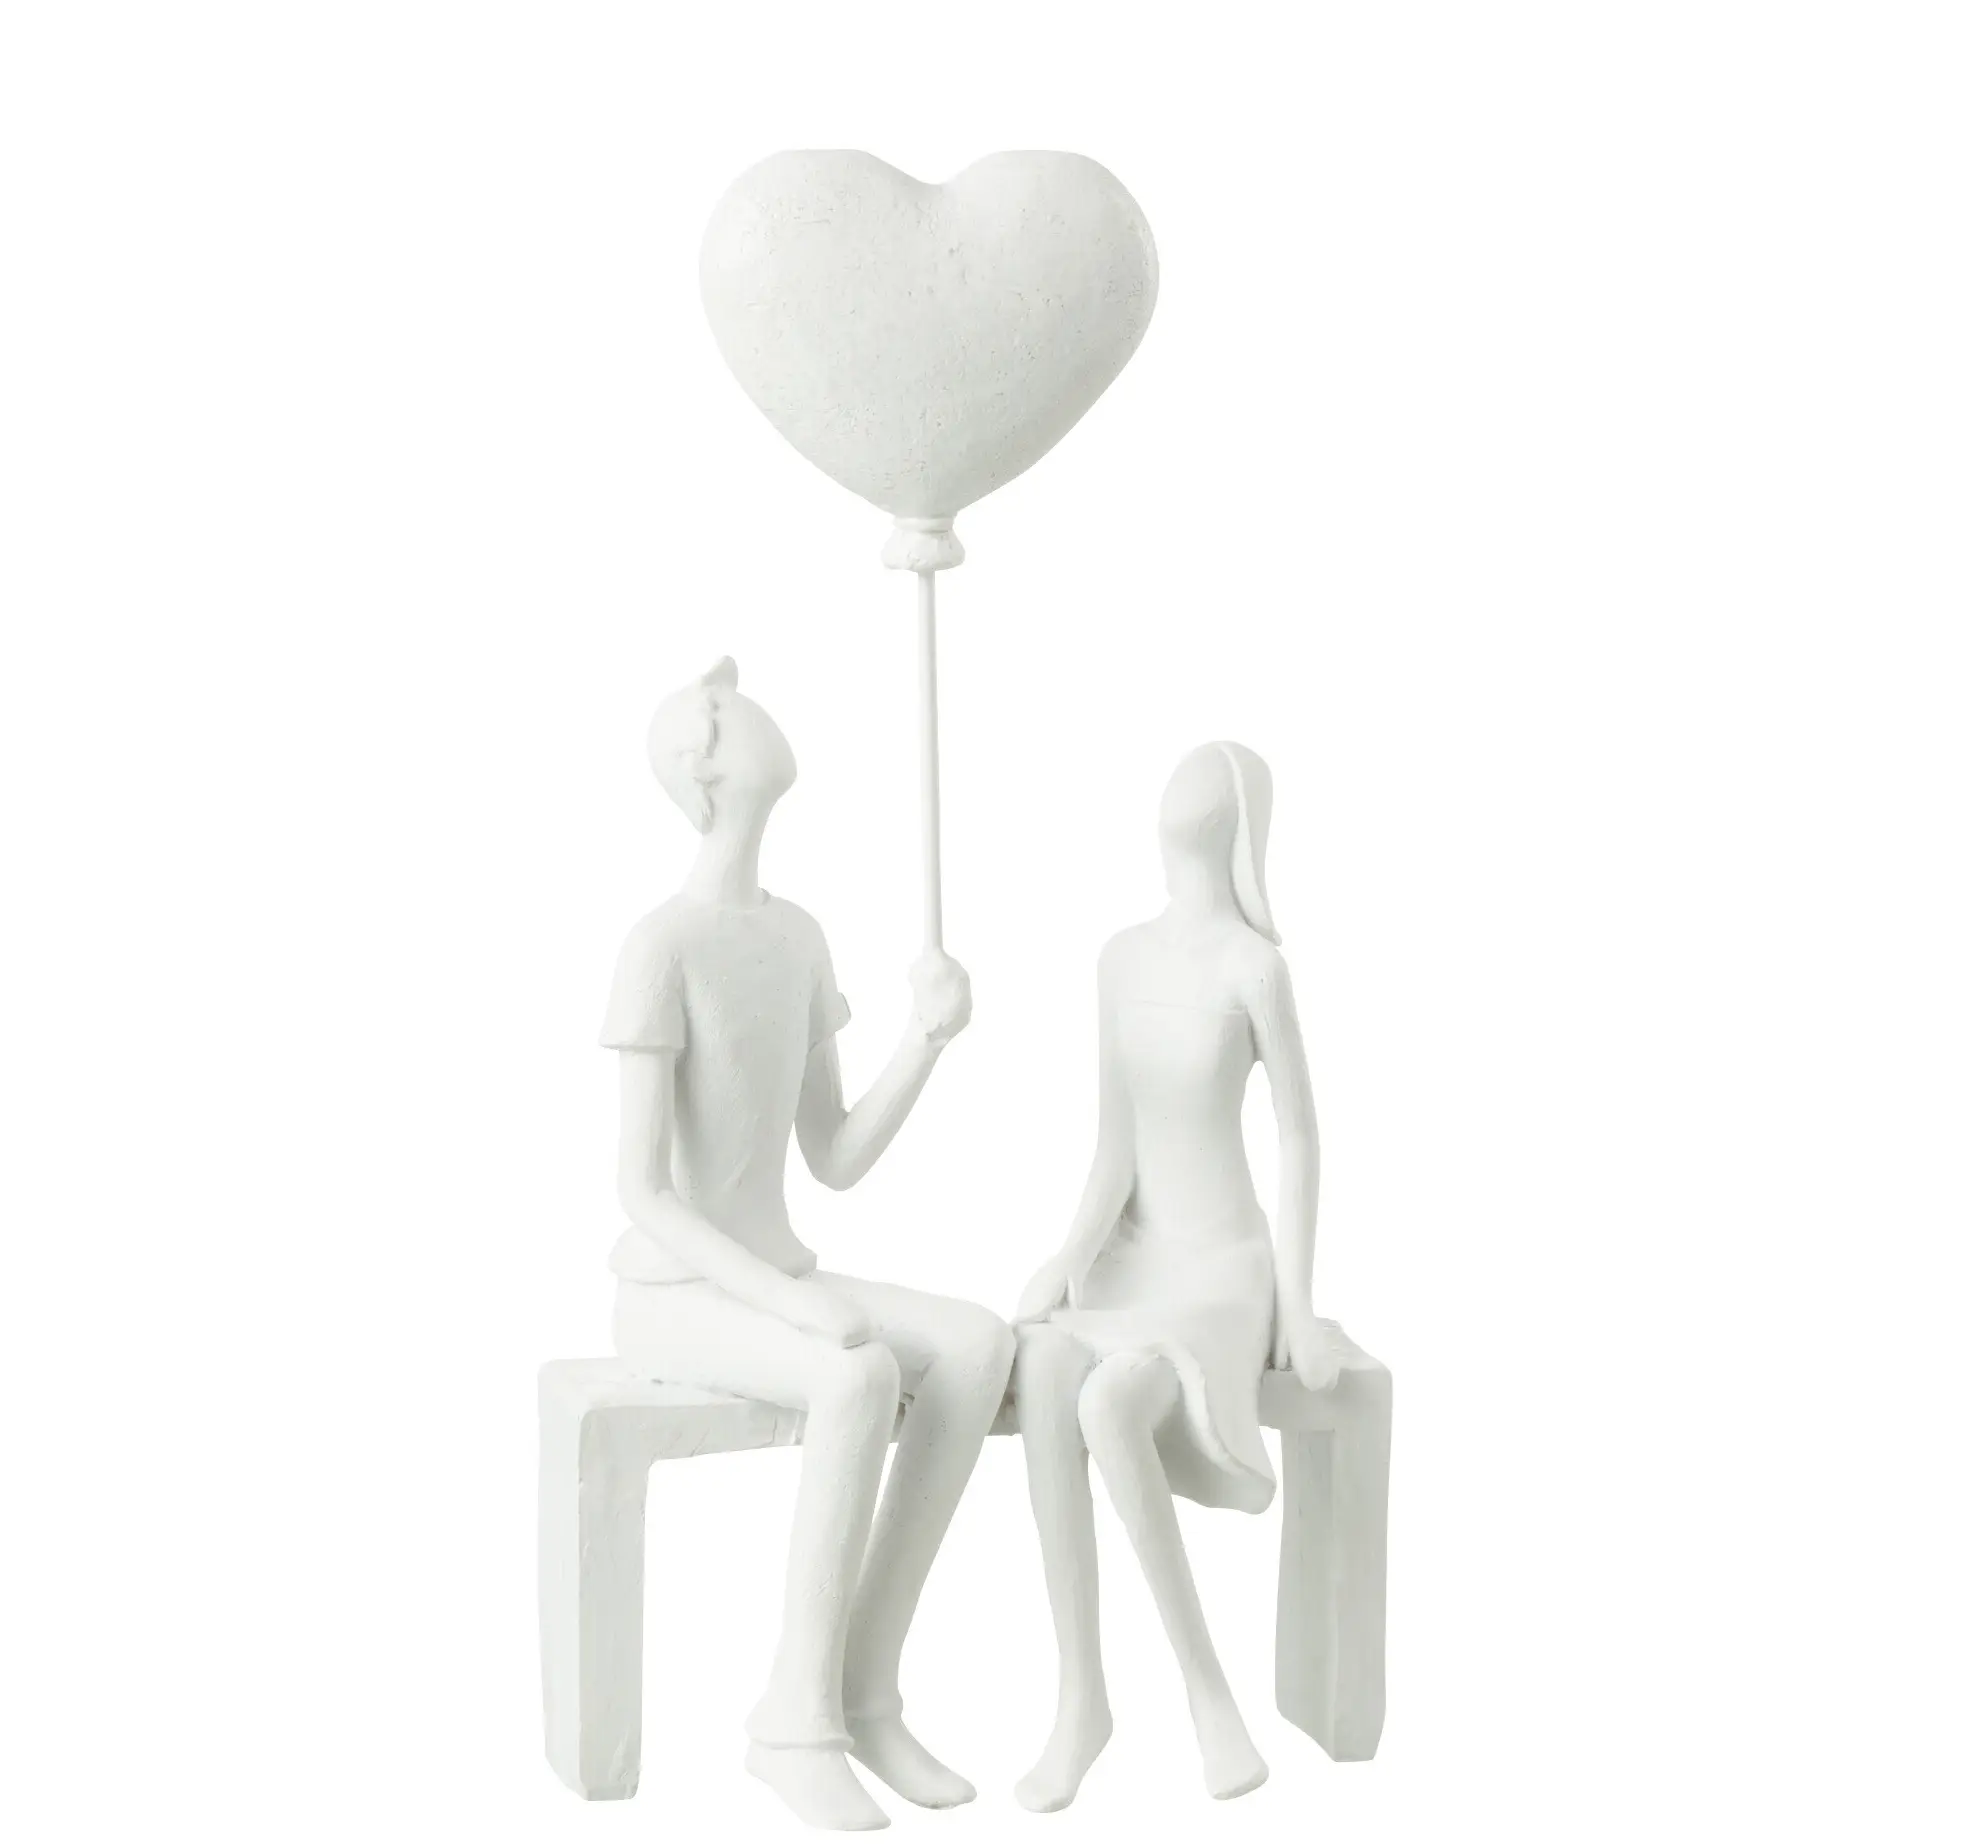 Herzballon in mit wei脽 Paar-Skulptur